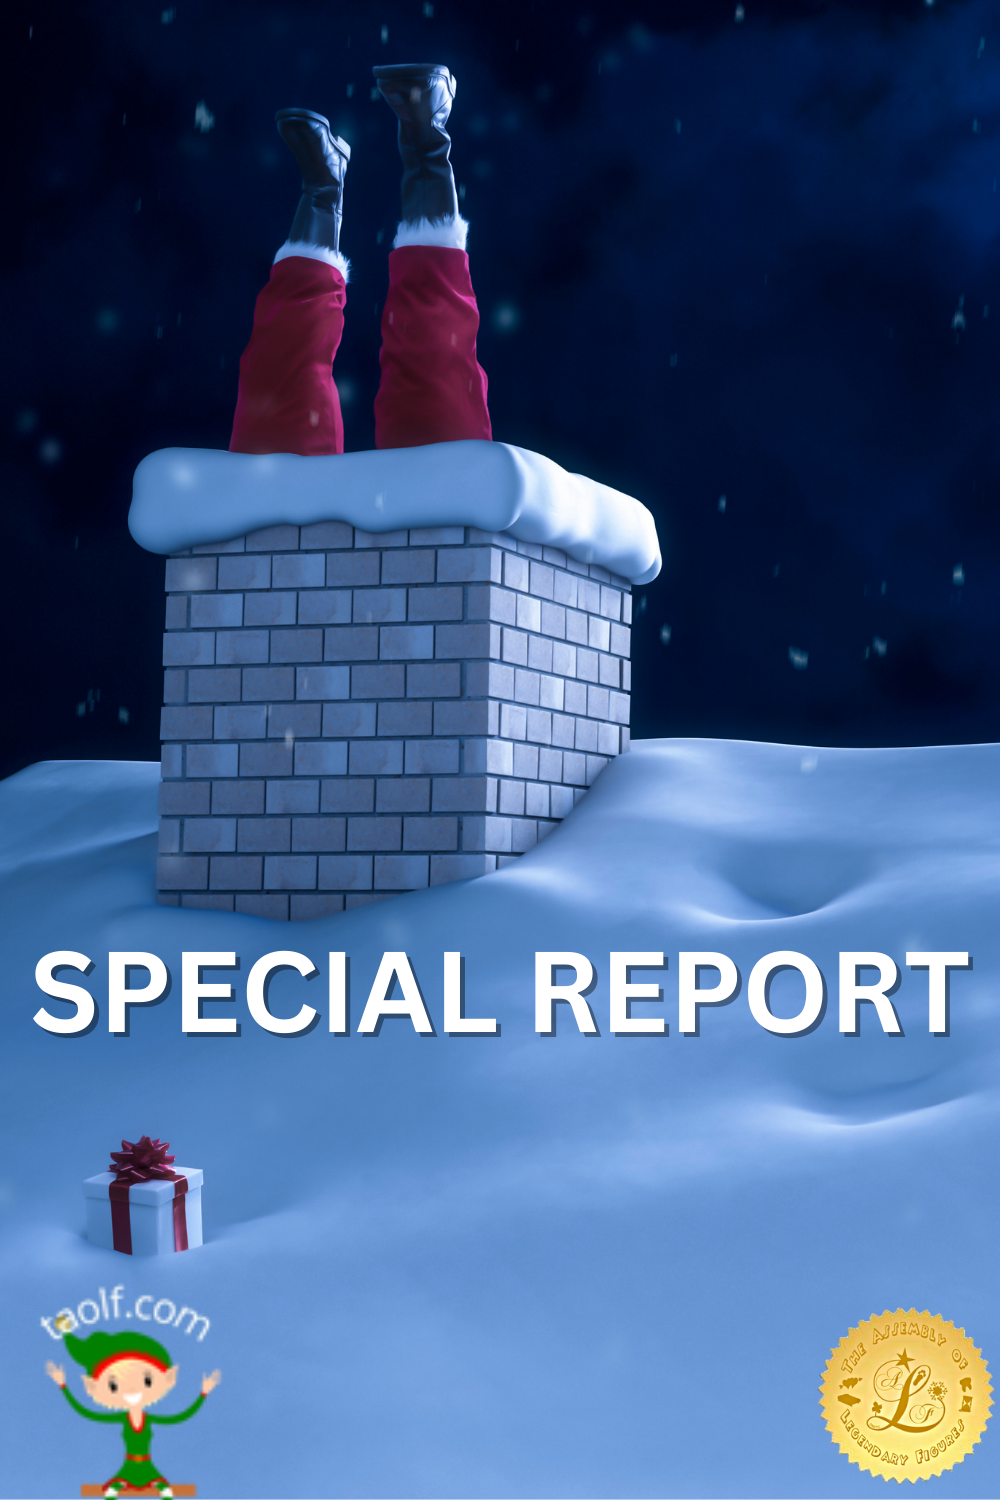 Santa Injured During Deliveries - Special Report